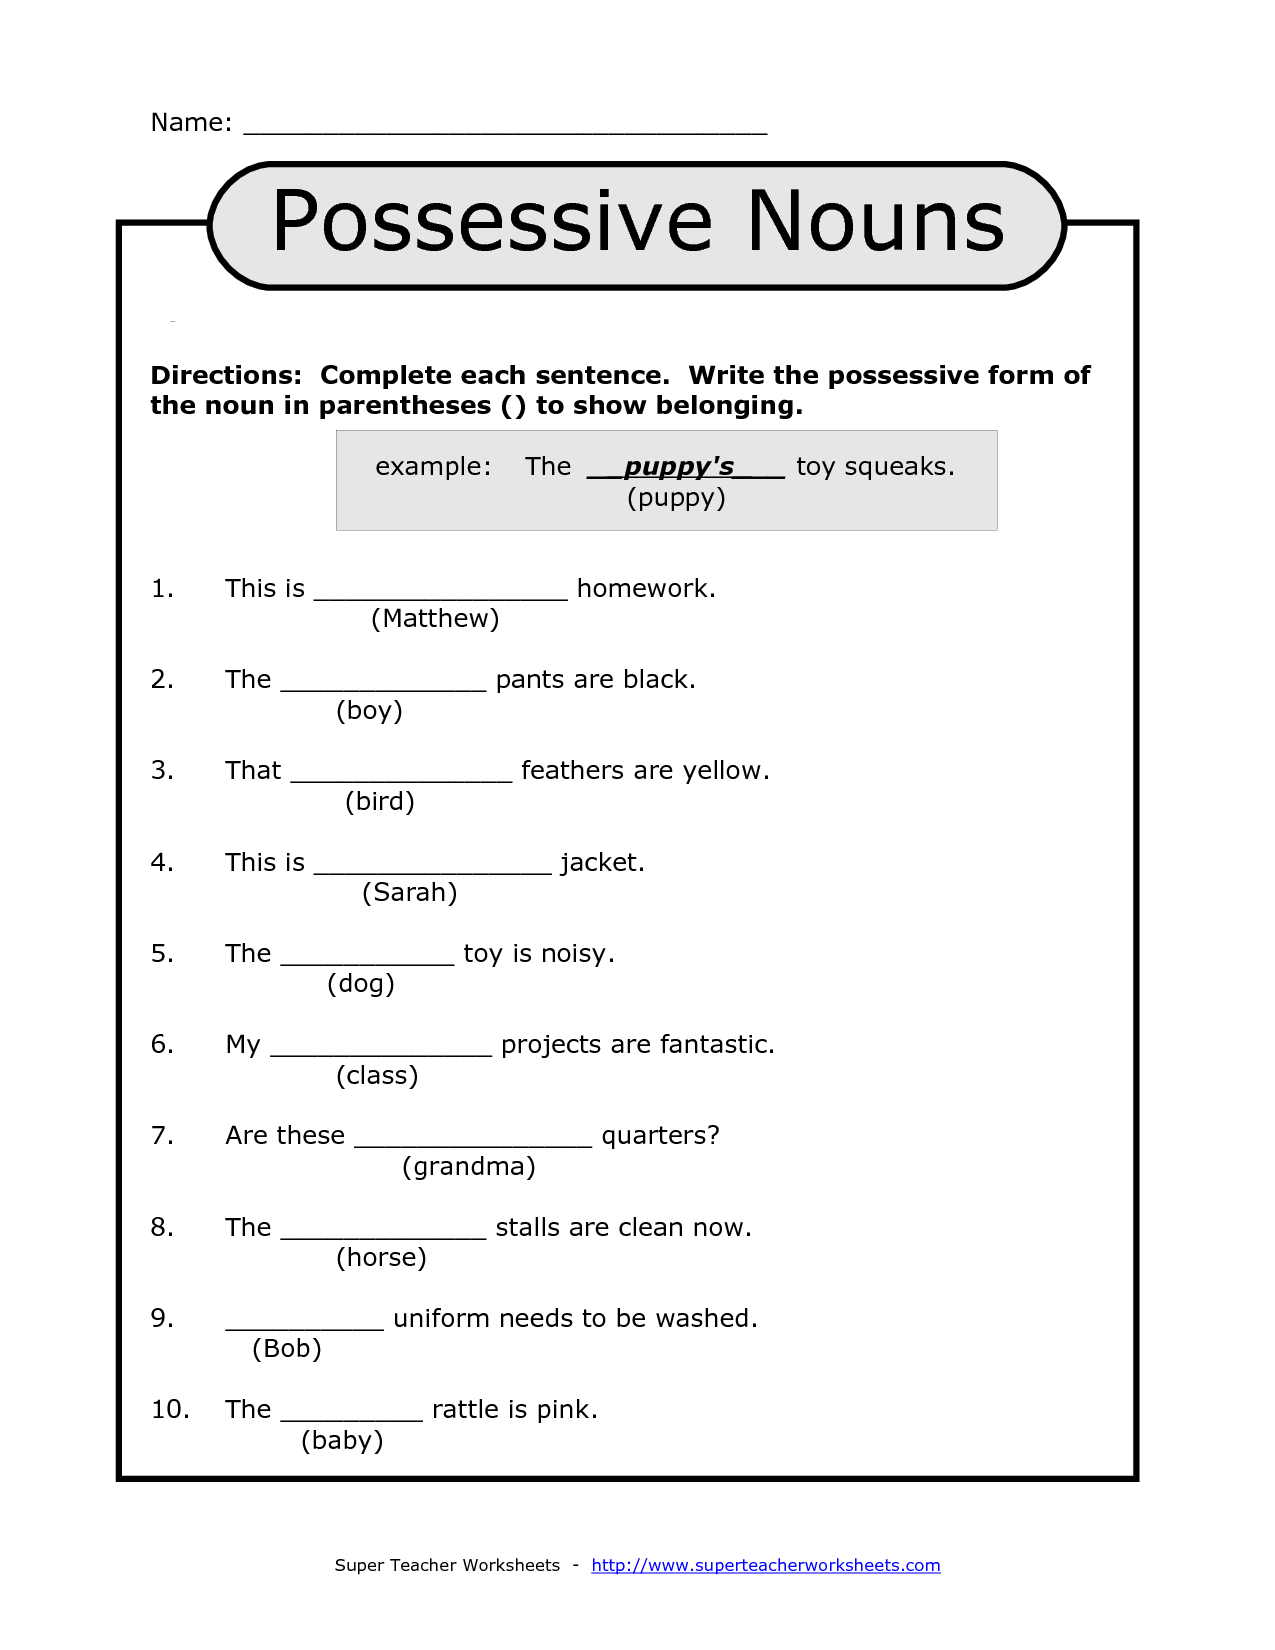 16-possessive-noun-worksheets-4-6-worksheeto